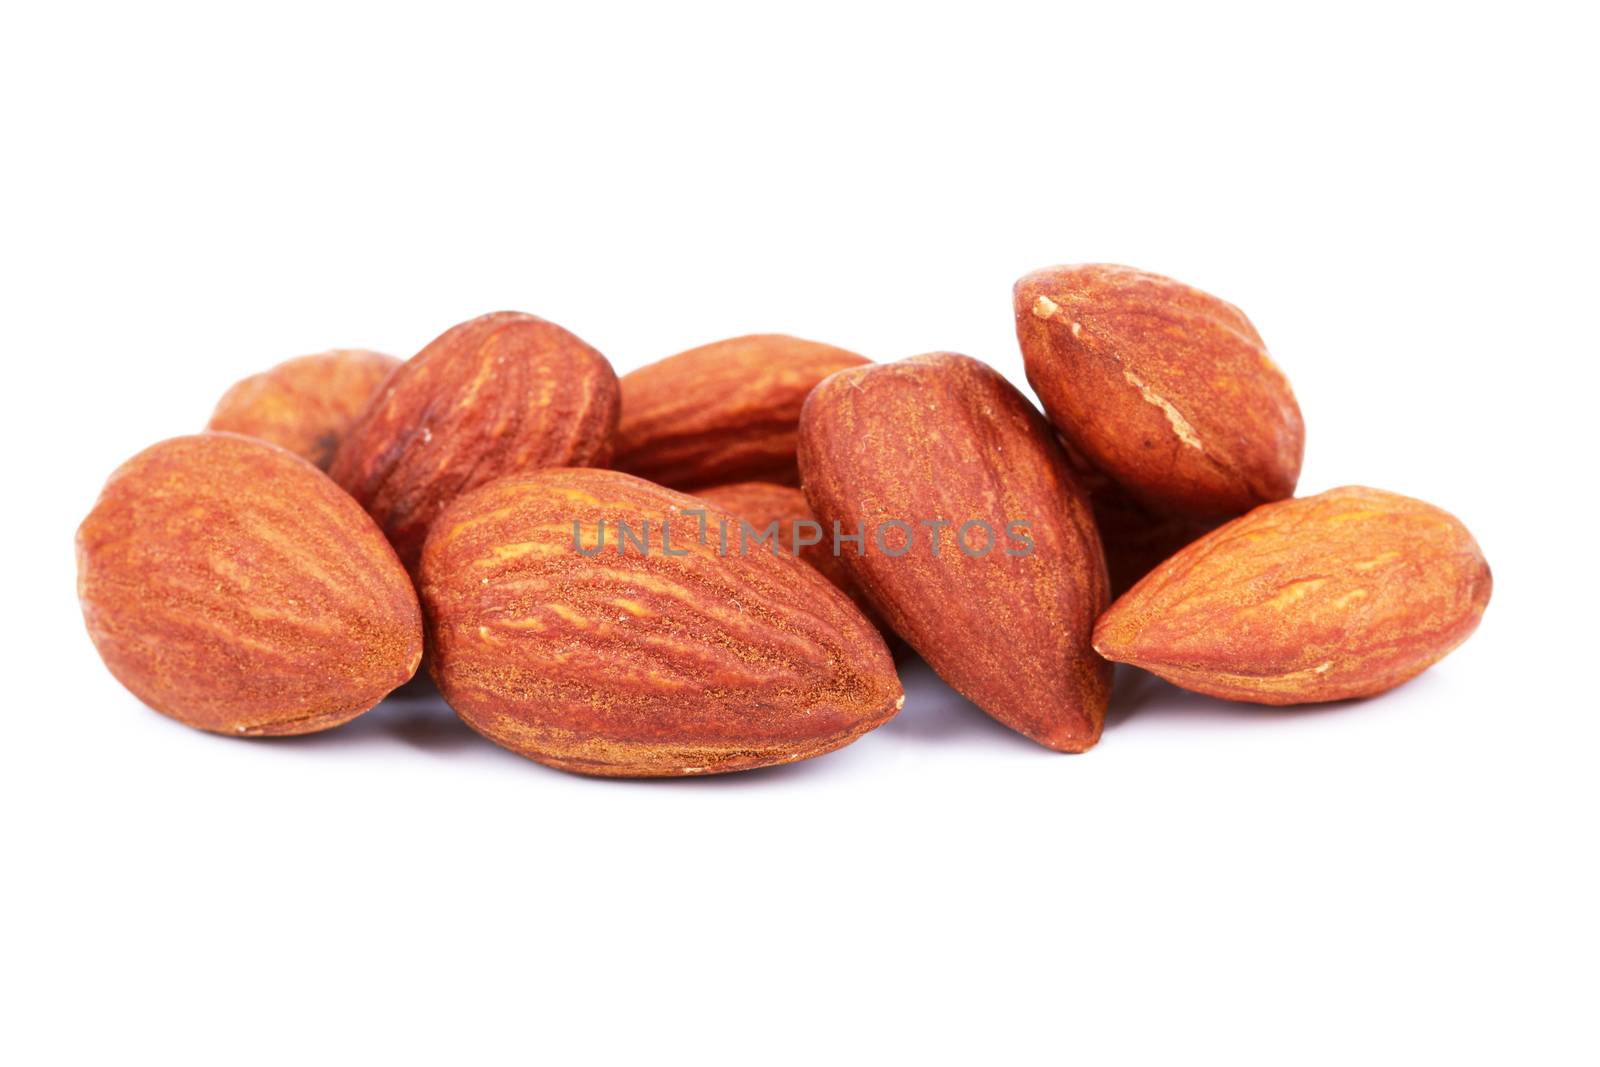 almond nut by pioneer111